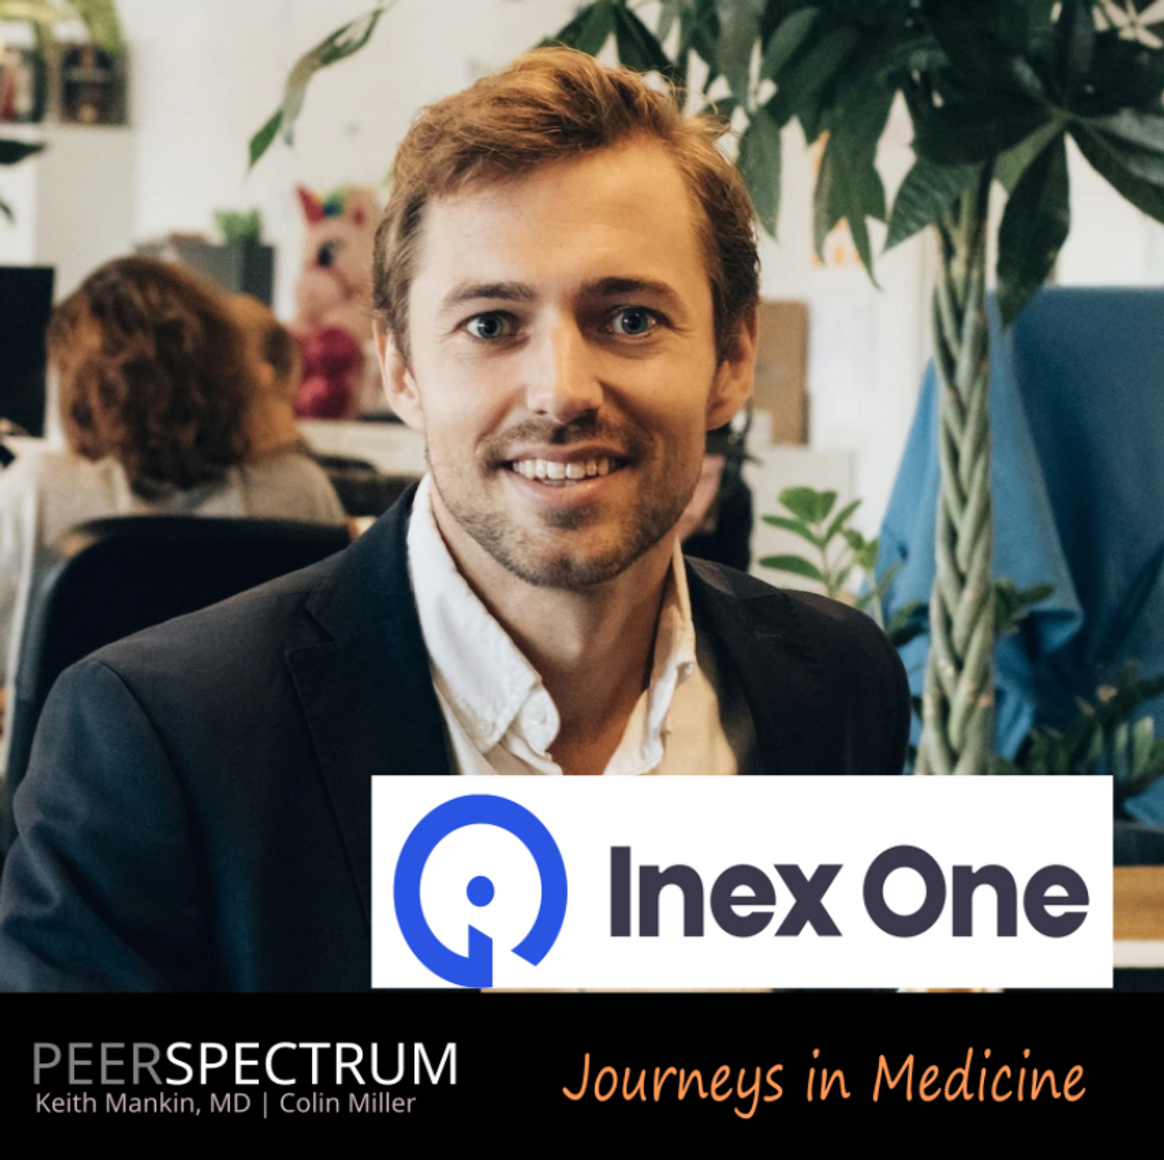 Headshot of Inex One CEO Max Friberg, with Peerspectrum and Inex One logos